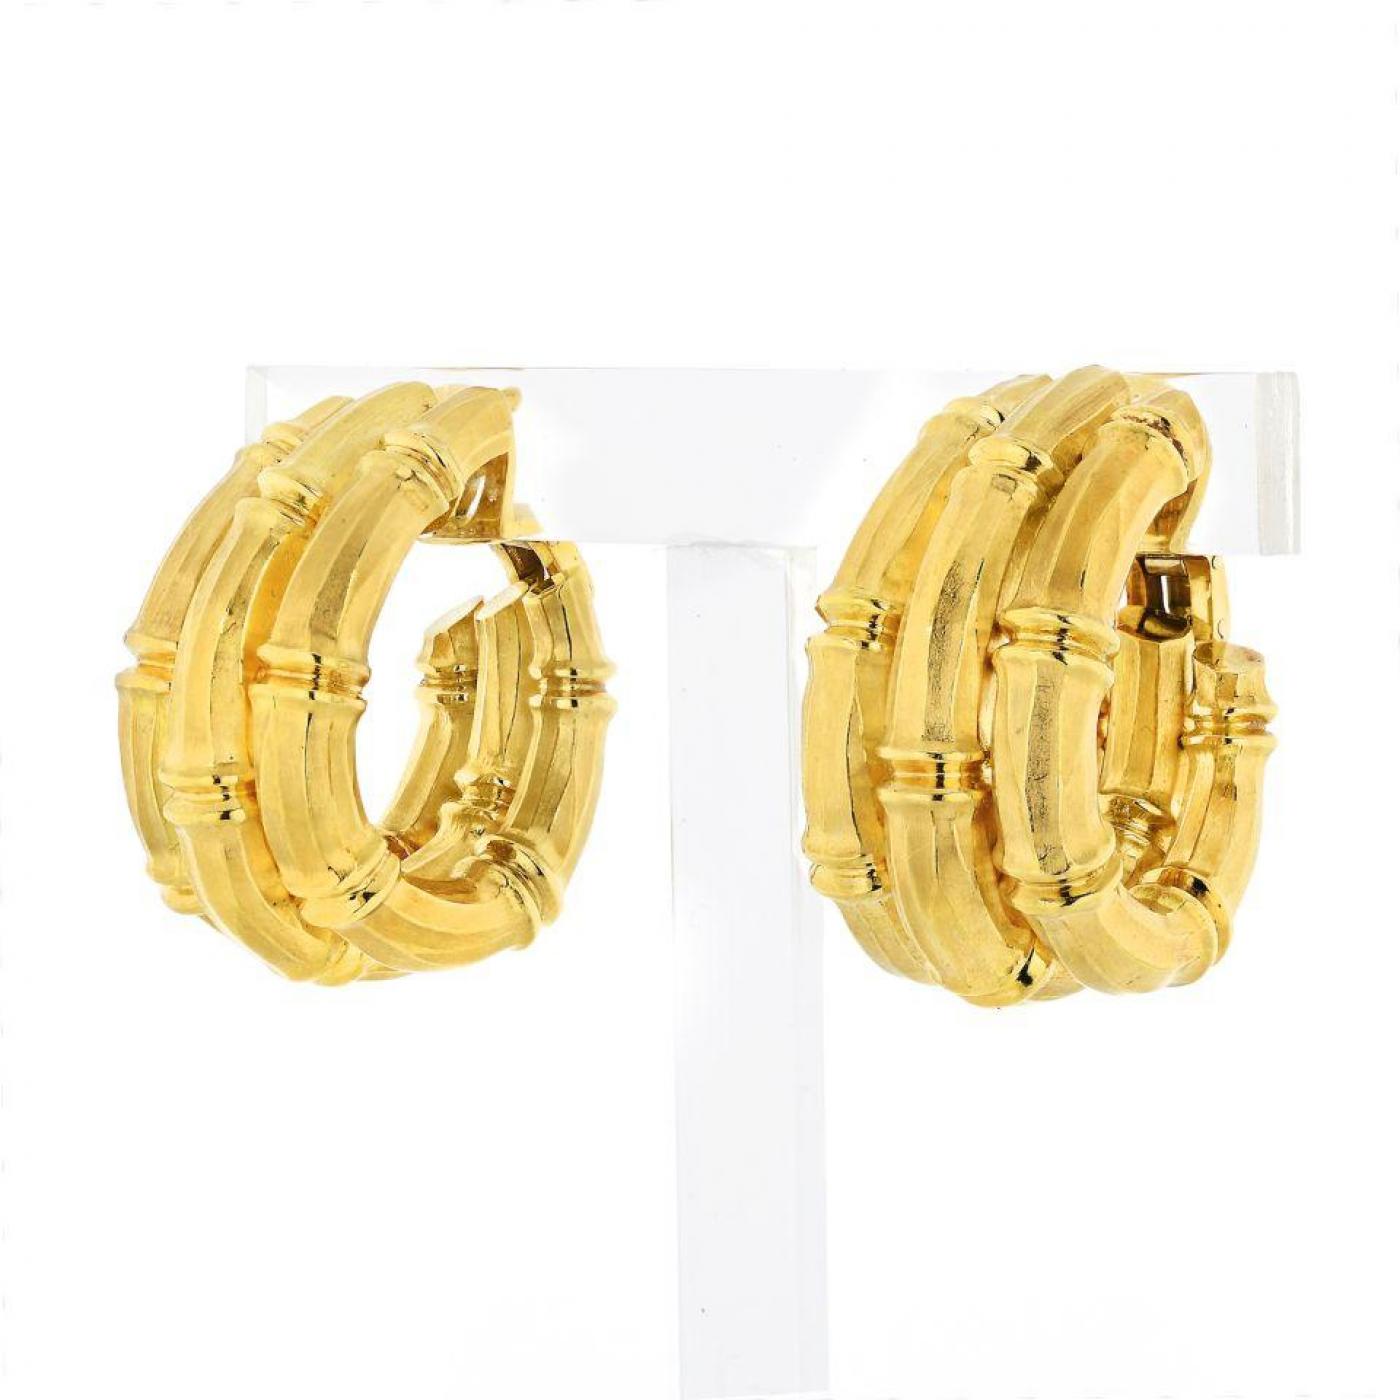 Cartier - CARTIER BAMBOO 18K YELLOW GOLD LARGE EARRINGS